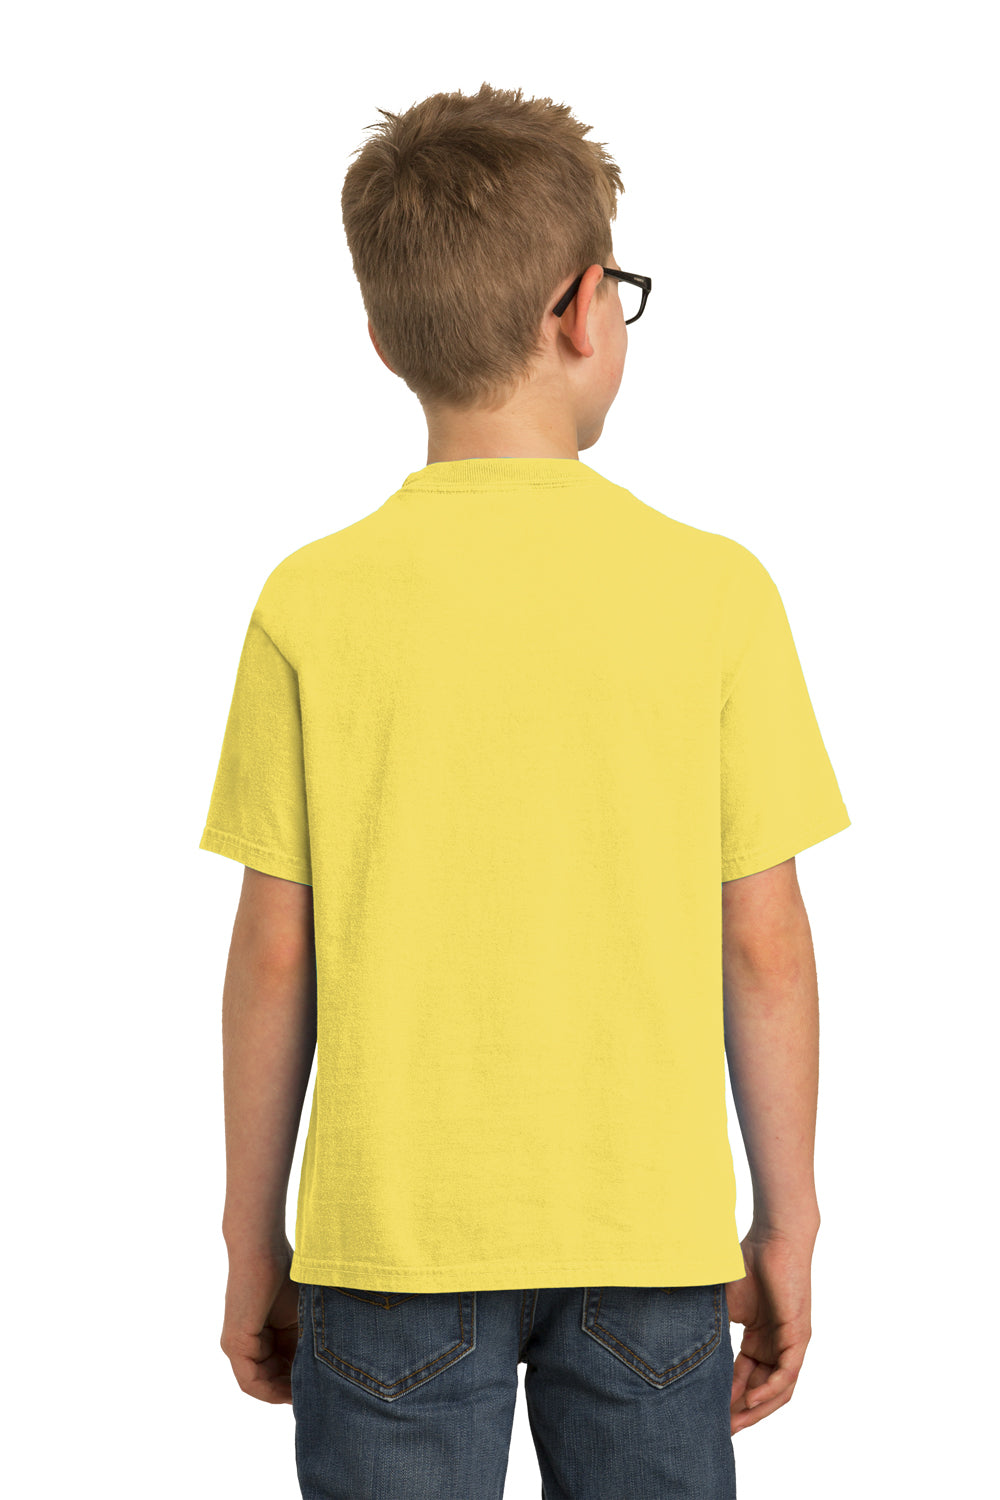 Port & Company Youth Beach Wash Short Sleeve Crewneck T-Shirt Popcorn Yellow Back